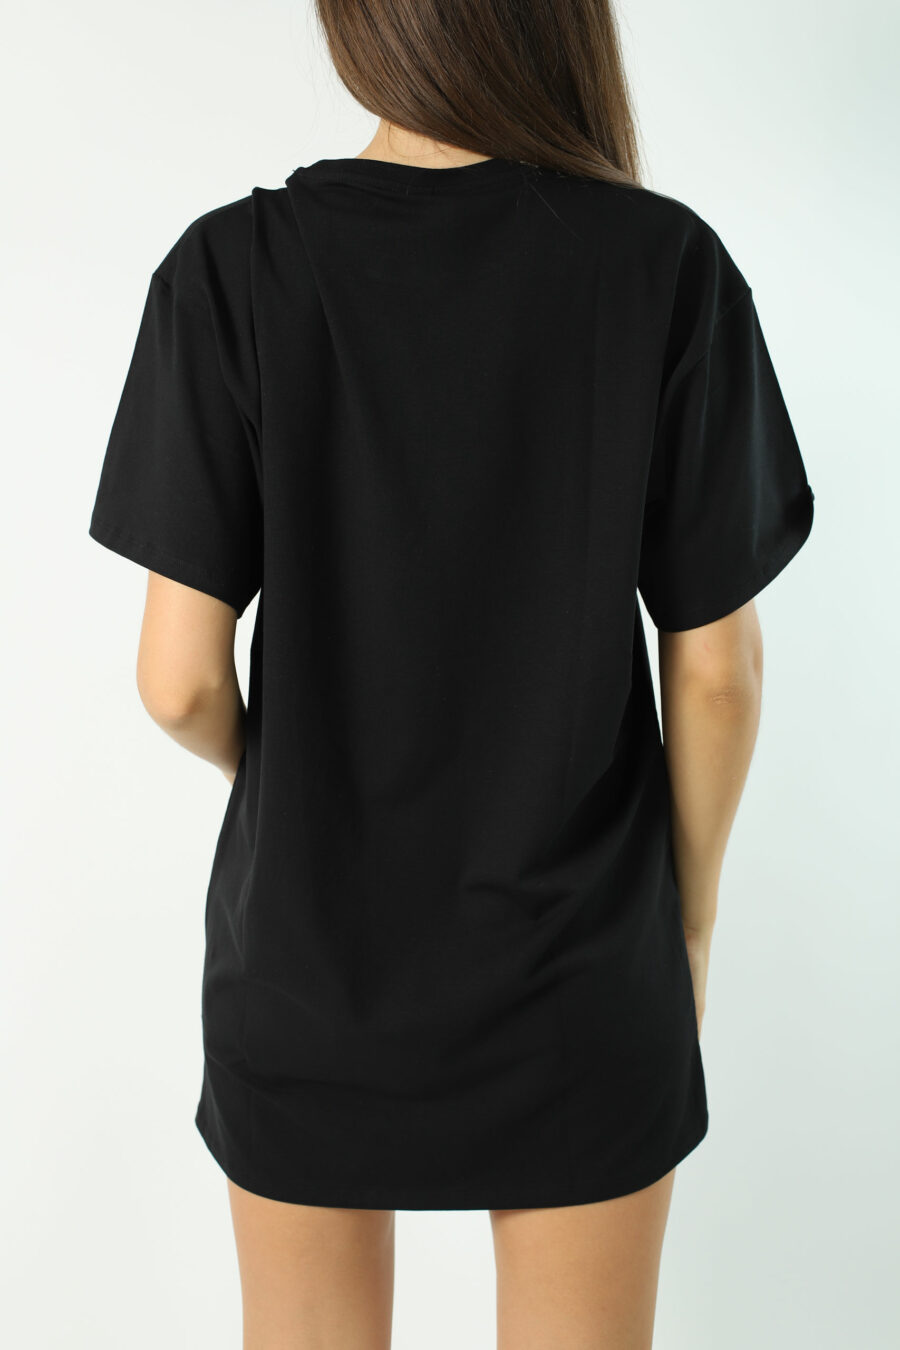 Black maxi t-shirt with gold mini-logo in rhinestones - Photos 2821